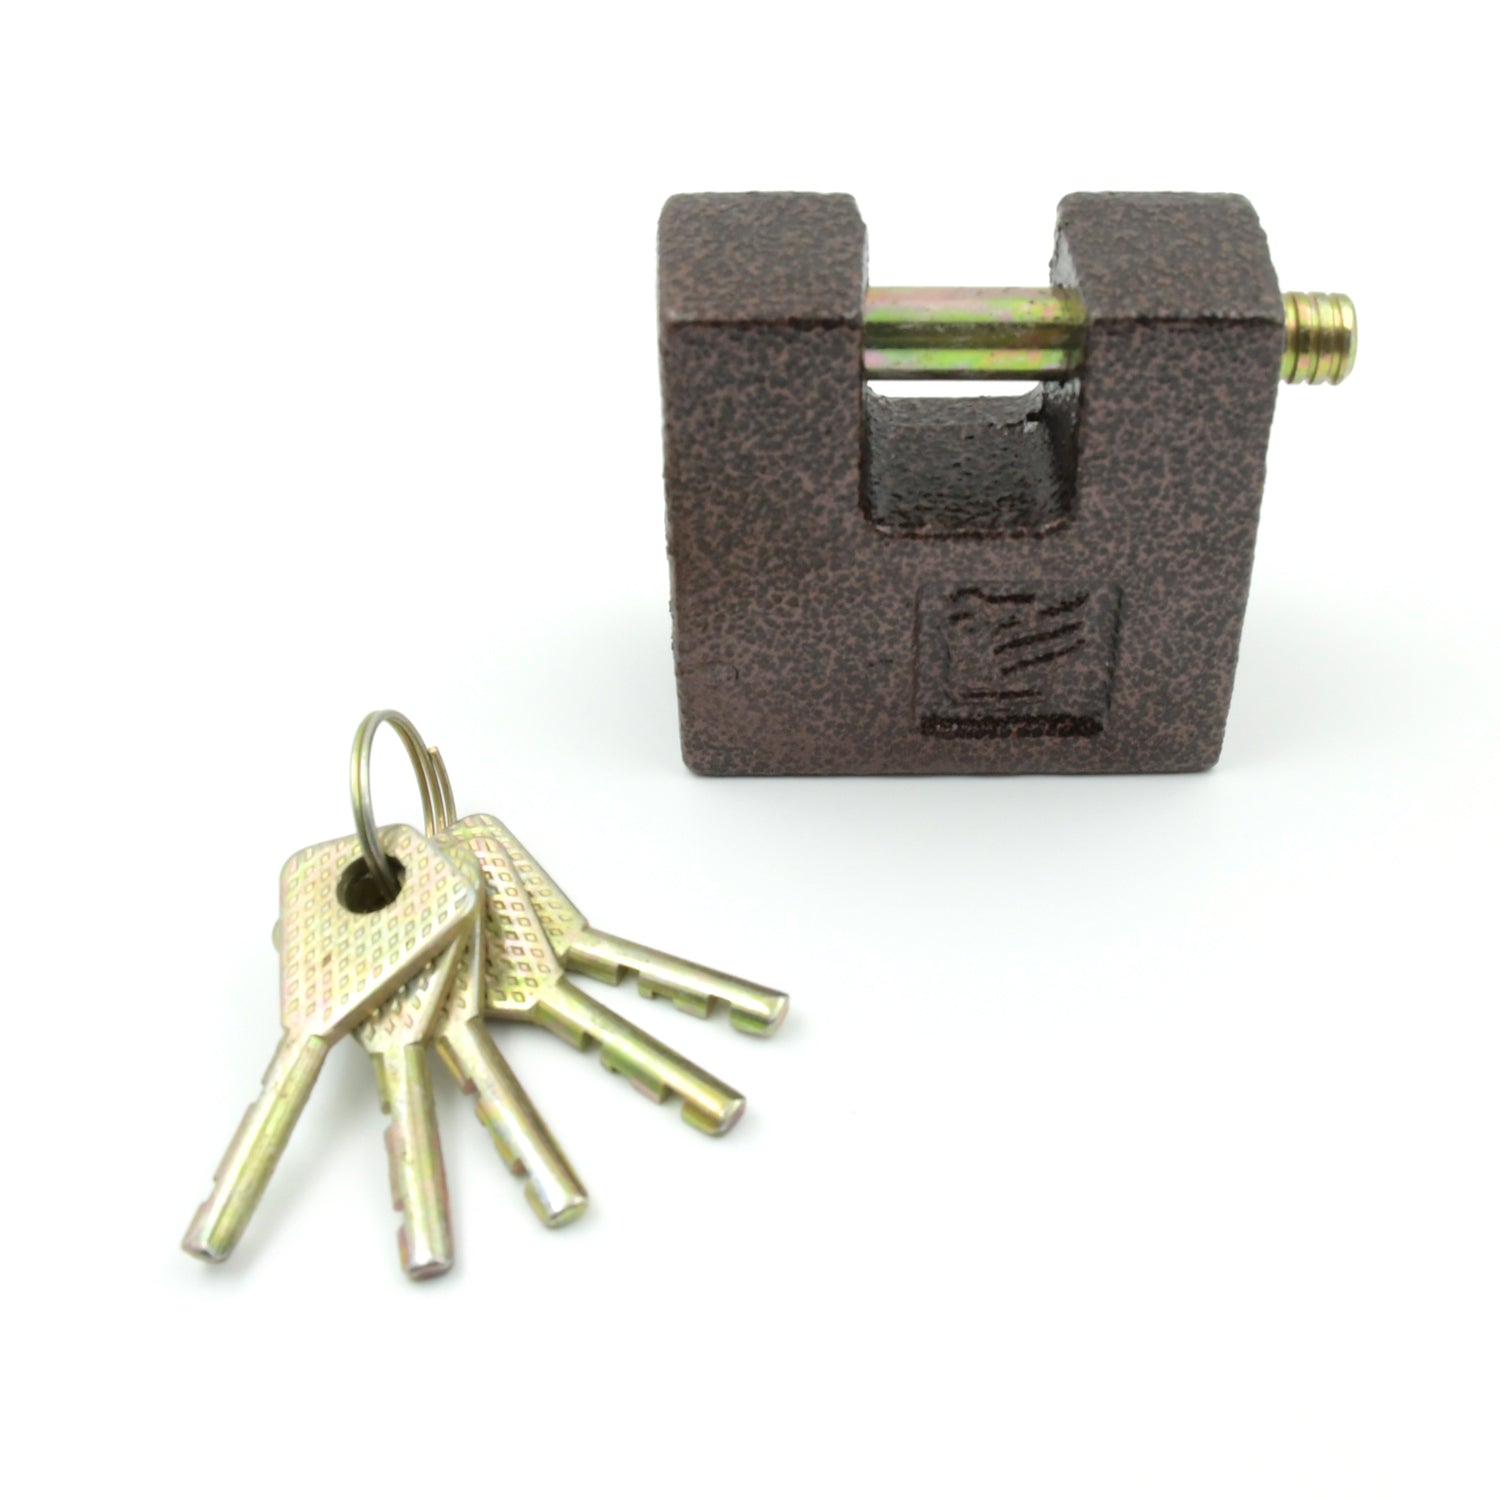 9456 Iron Pad lock, Brass Core and Thickened Spray Black Iron Door Lock With 5 pc Keys for Home Dormitory, Waterproof Antirust Anti-theft Padlocks Outdoor Gate Shed Locks Warehouse Big Iron Door Drawer Lock (63 mm )